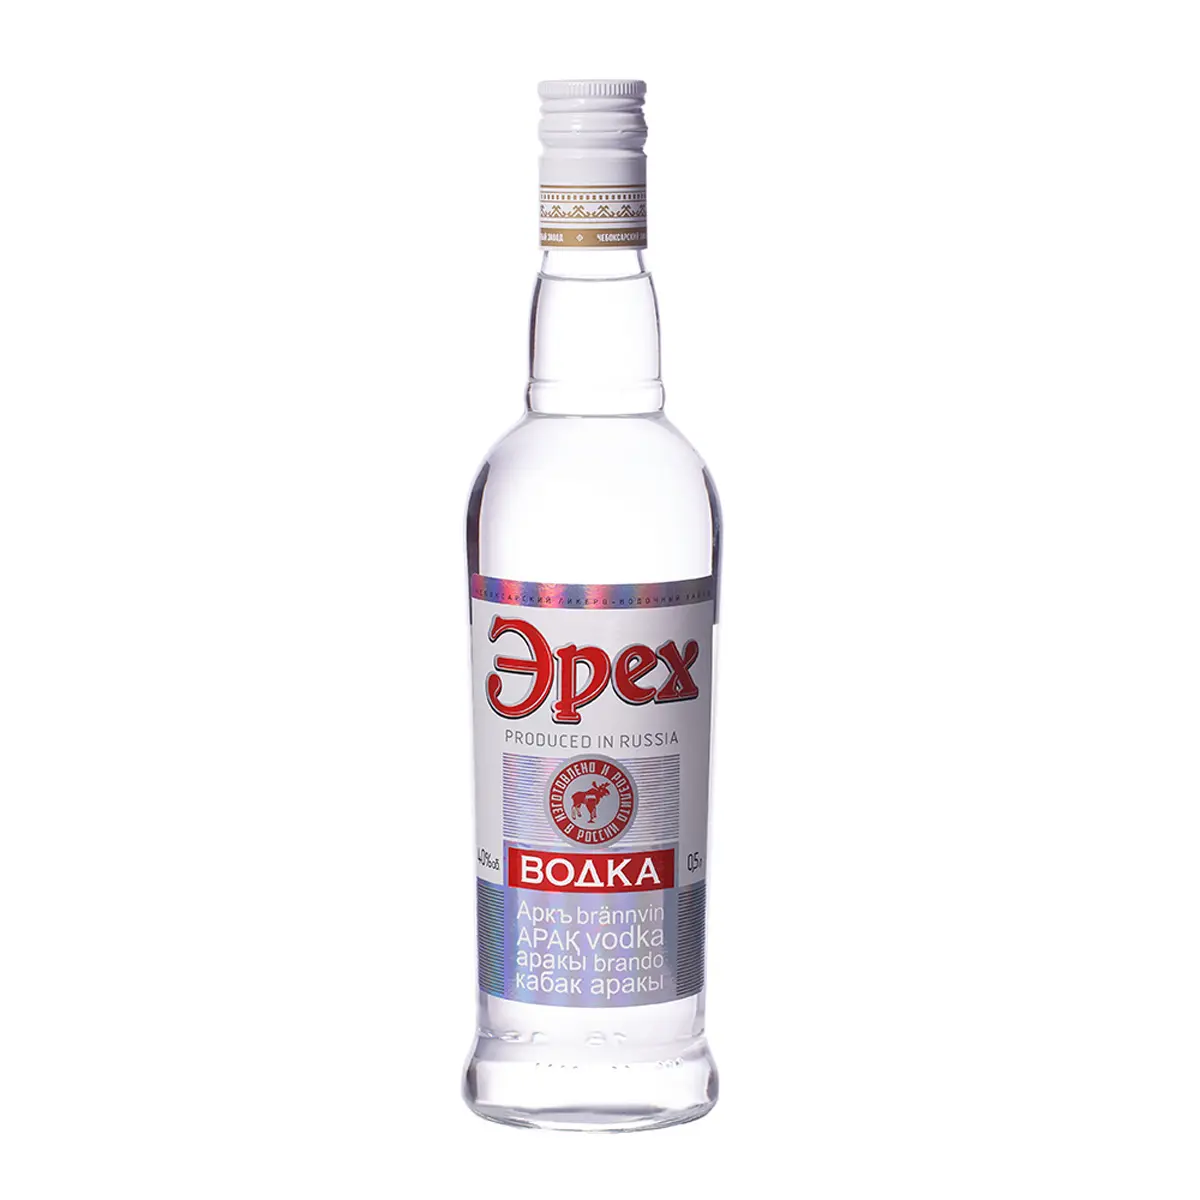 Бутылка водки EREKH 40% 0,5 л.